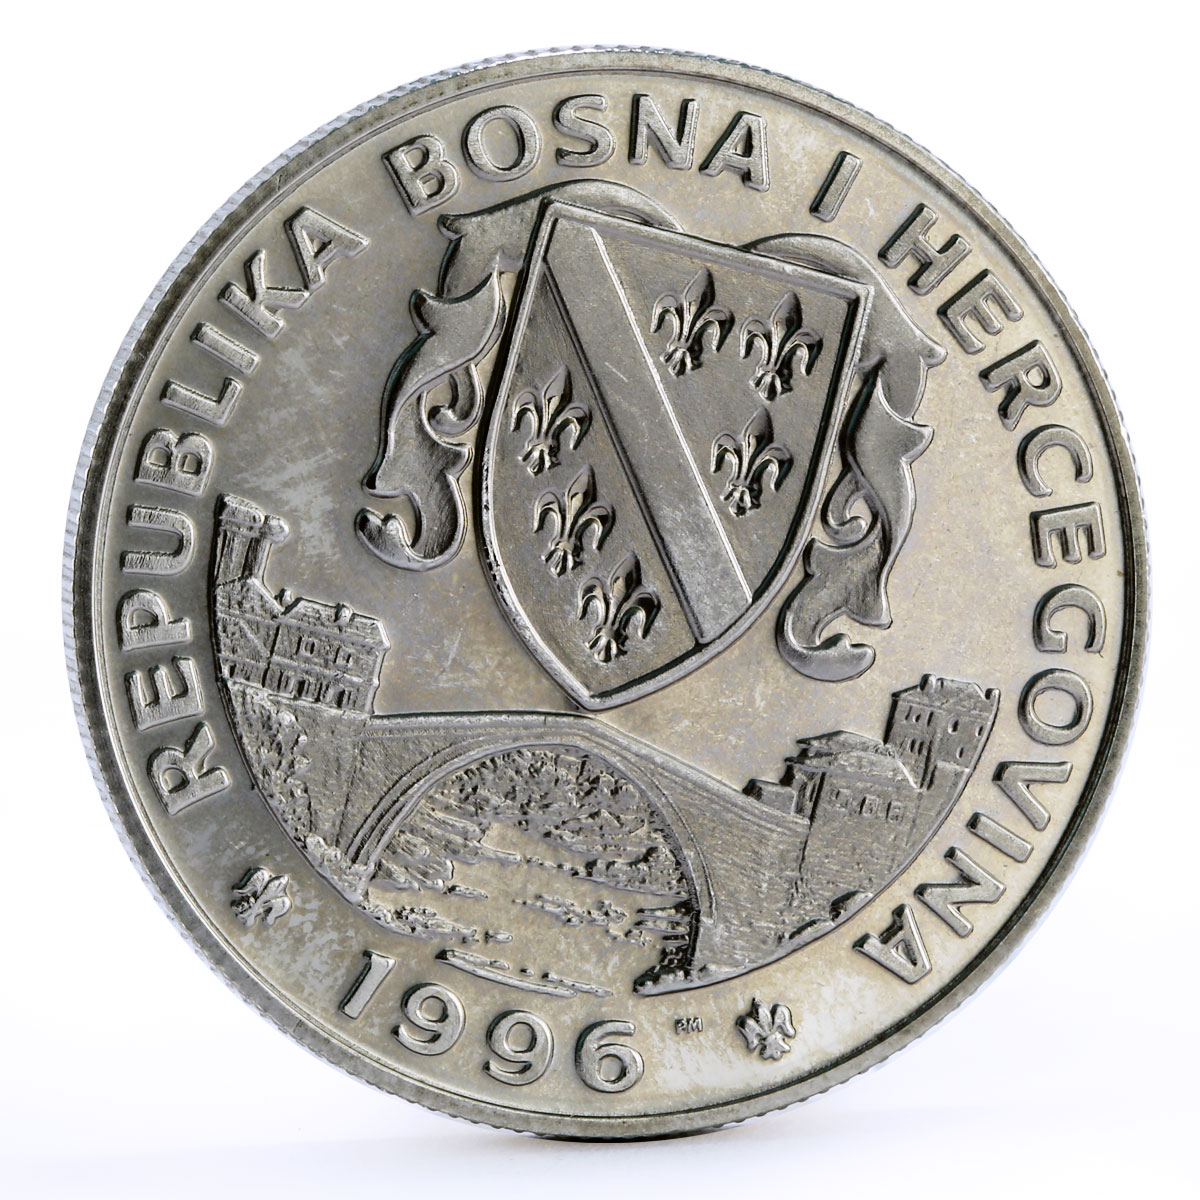 Bosnia and Herzegovina 1 suverena Endangered Fauna Stallion Horse CuNi coin 1996